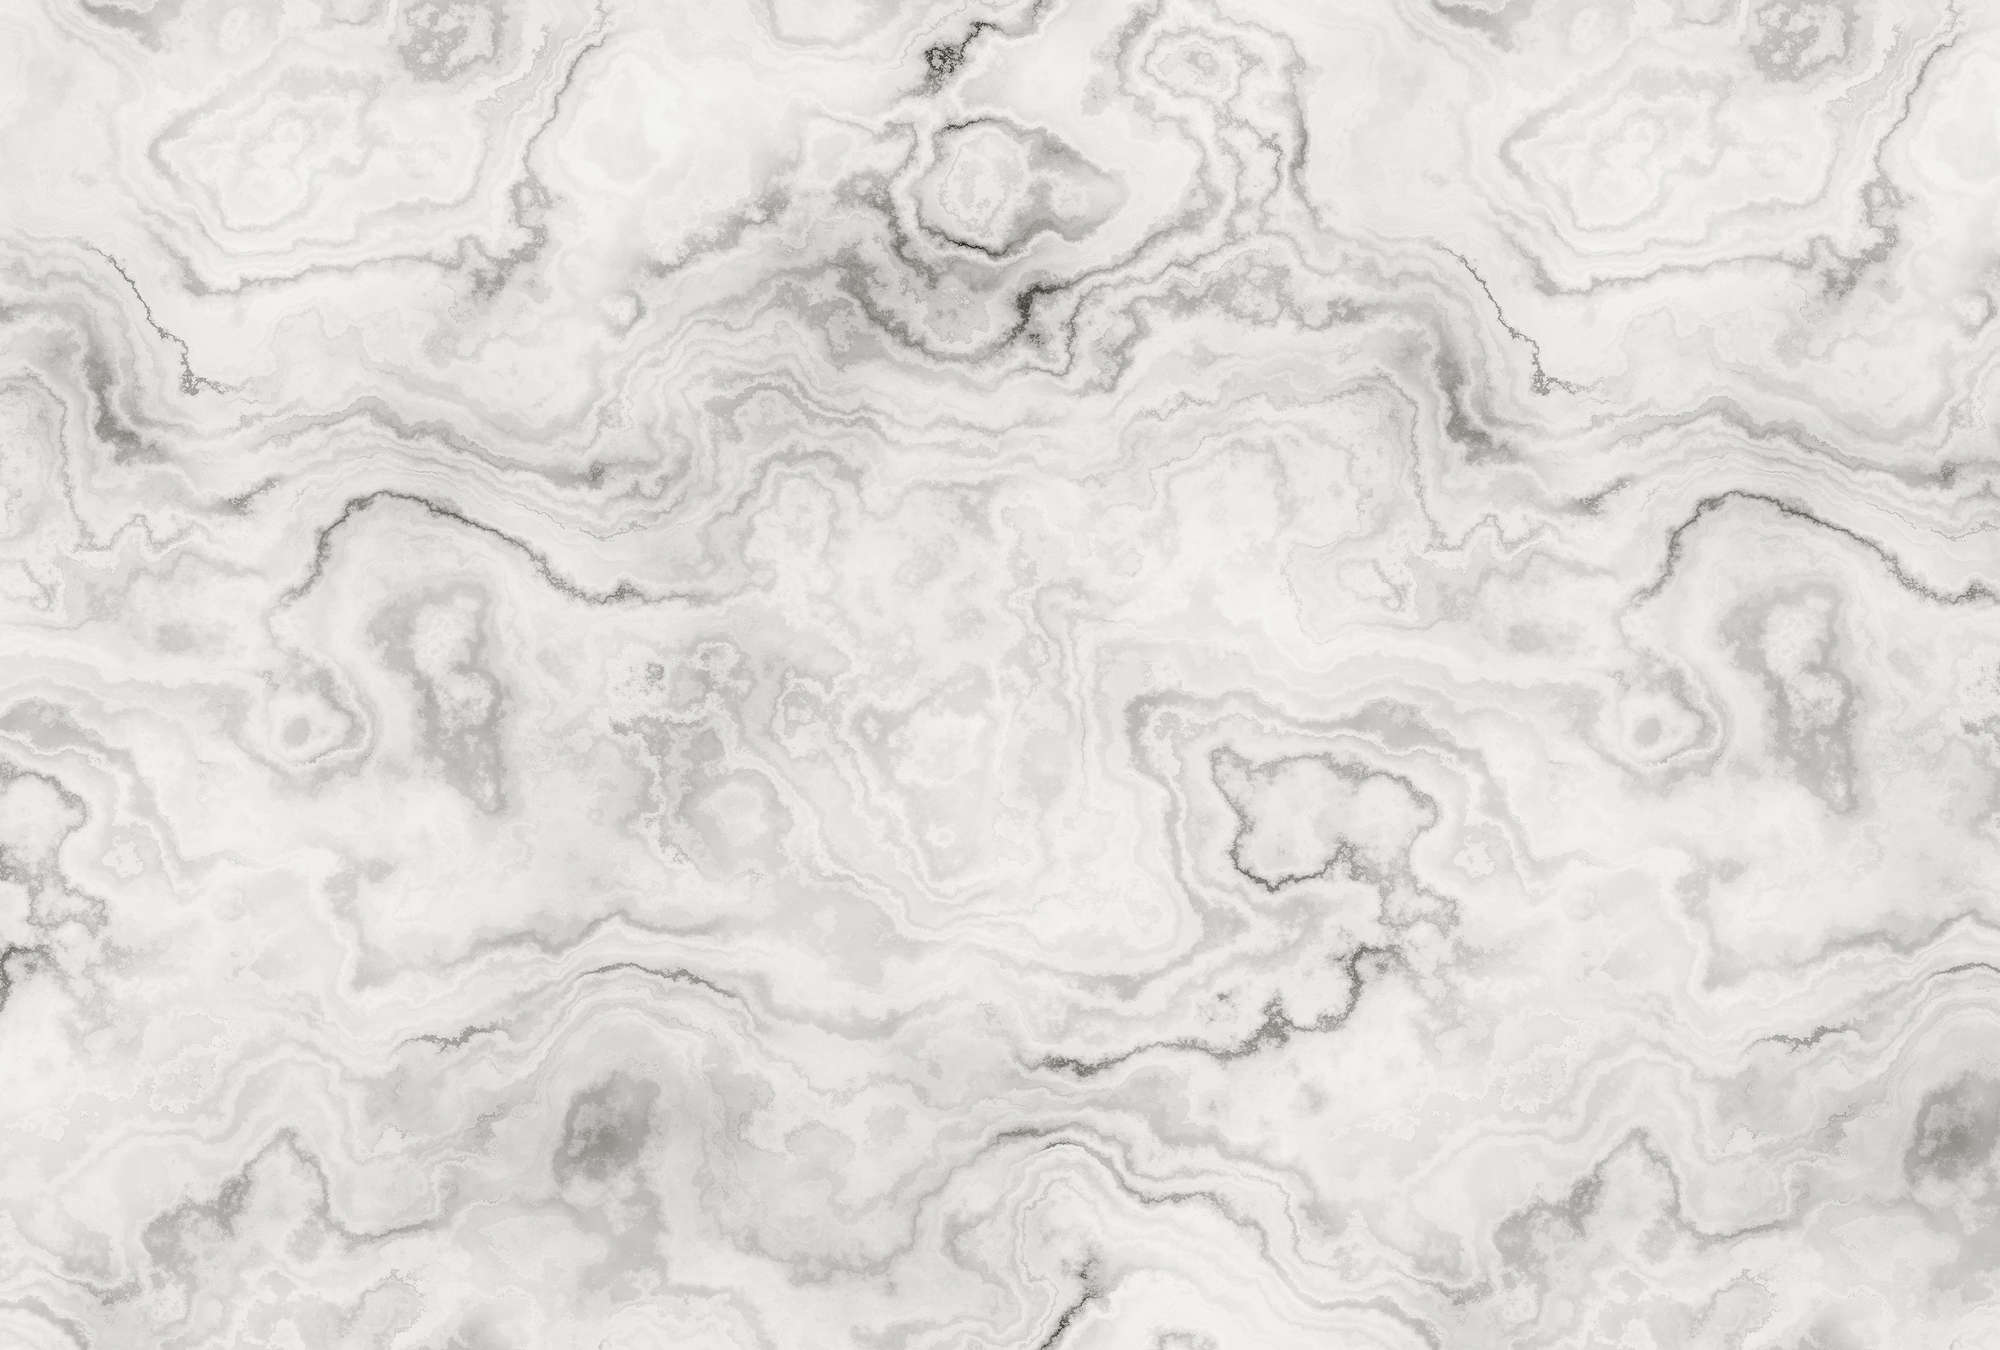             Carrara 1 - Papel pintado elegante efecto mármol - Gris, Blanco | Liso mate
        